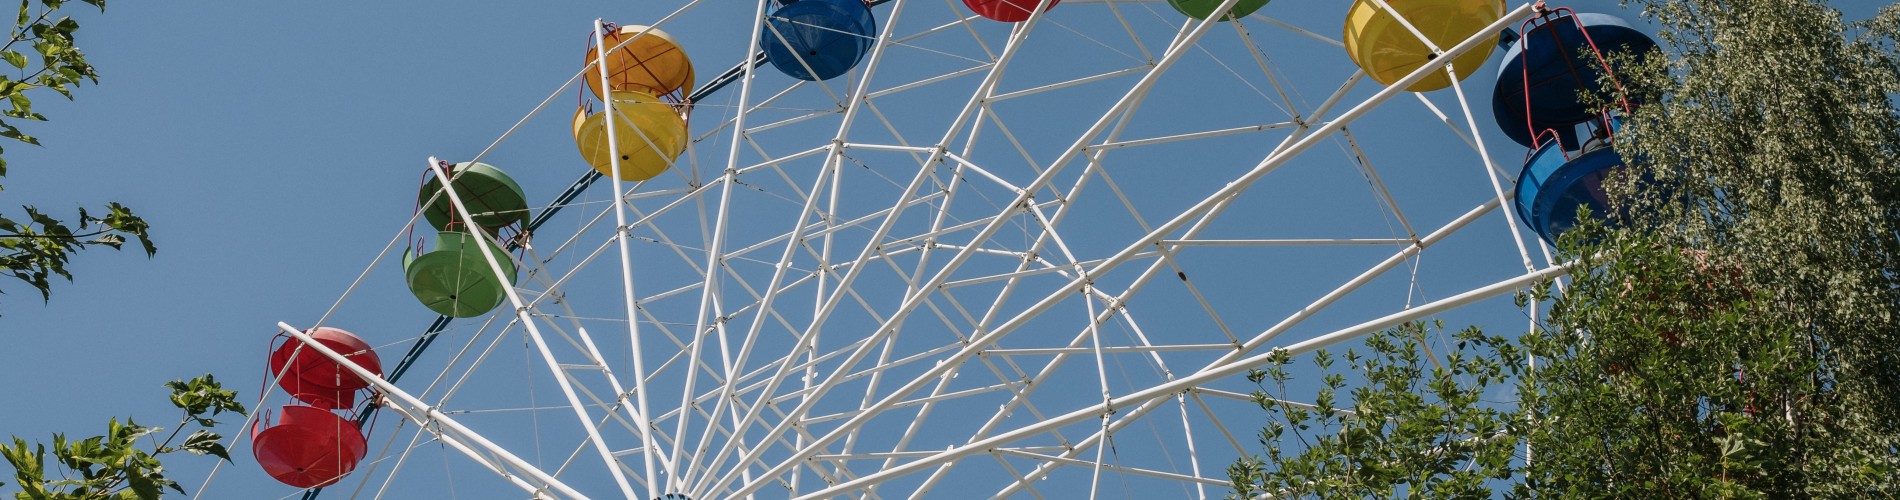 colorful Ferris wheel, against a blue sky